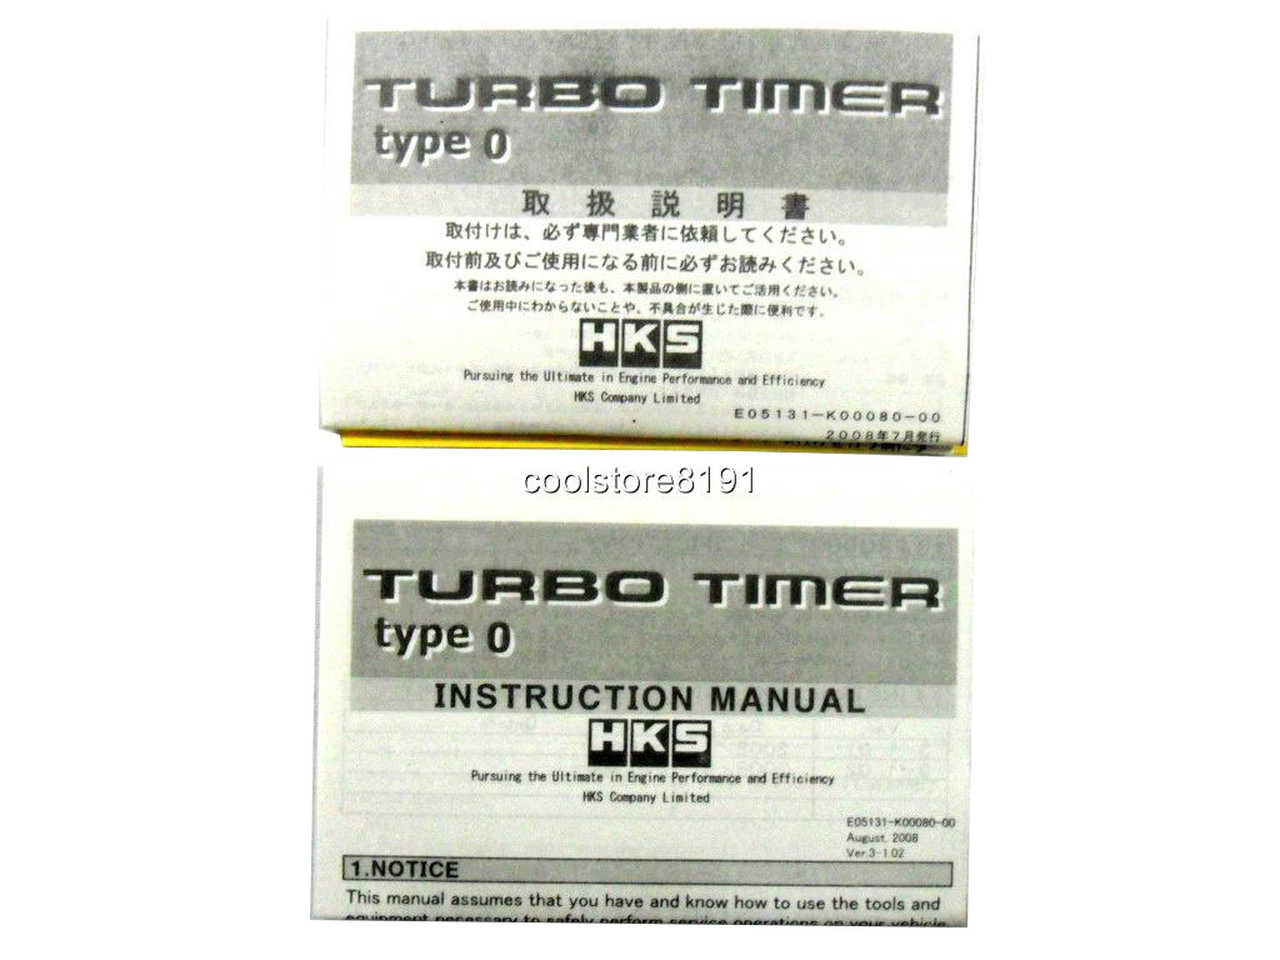 apexi turbo timer manual instruction